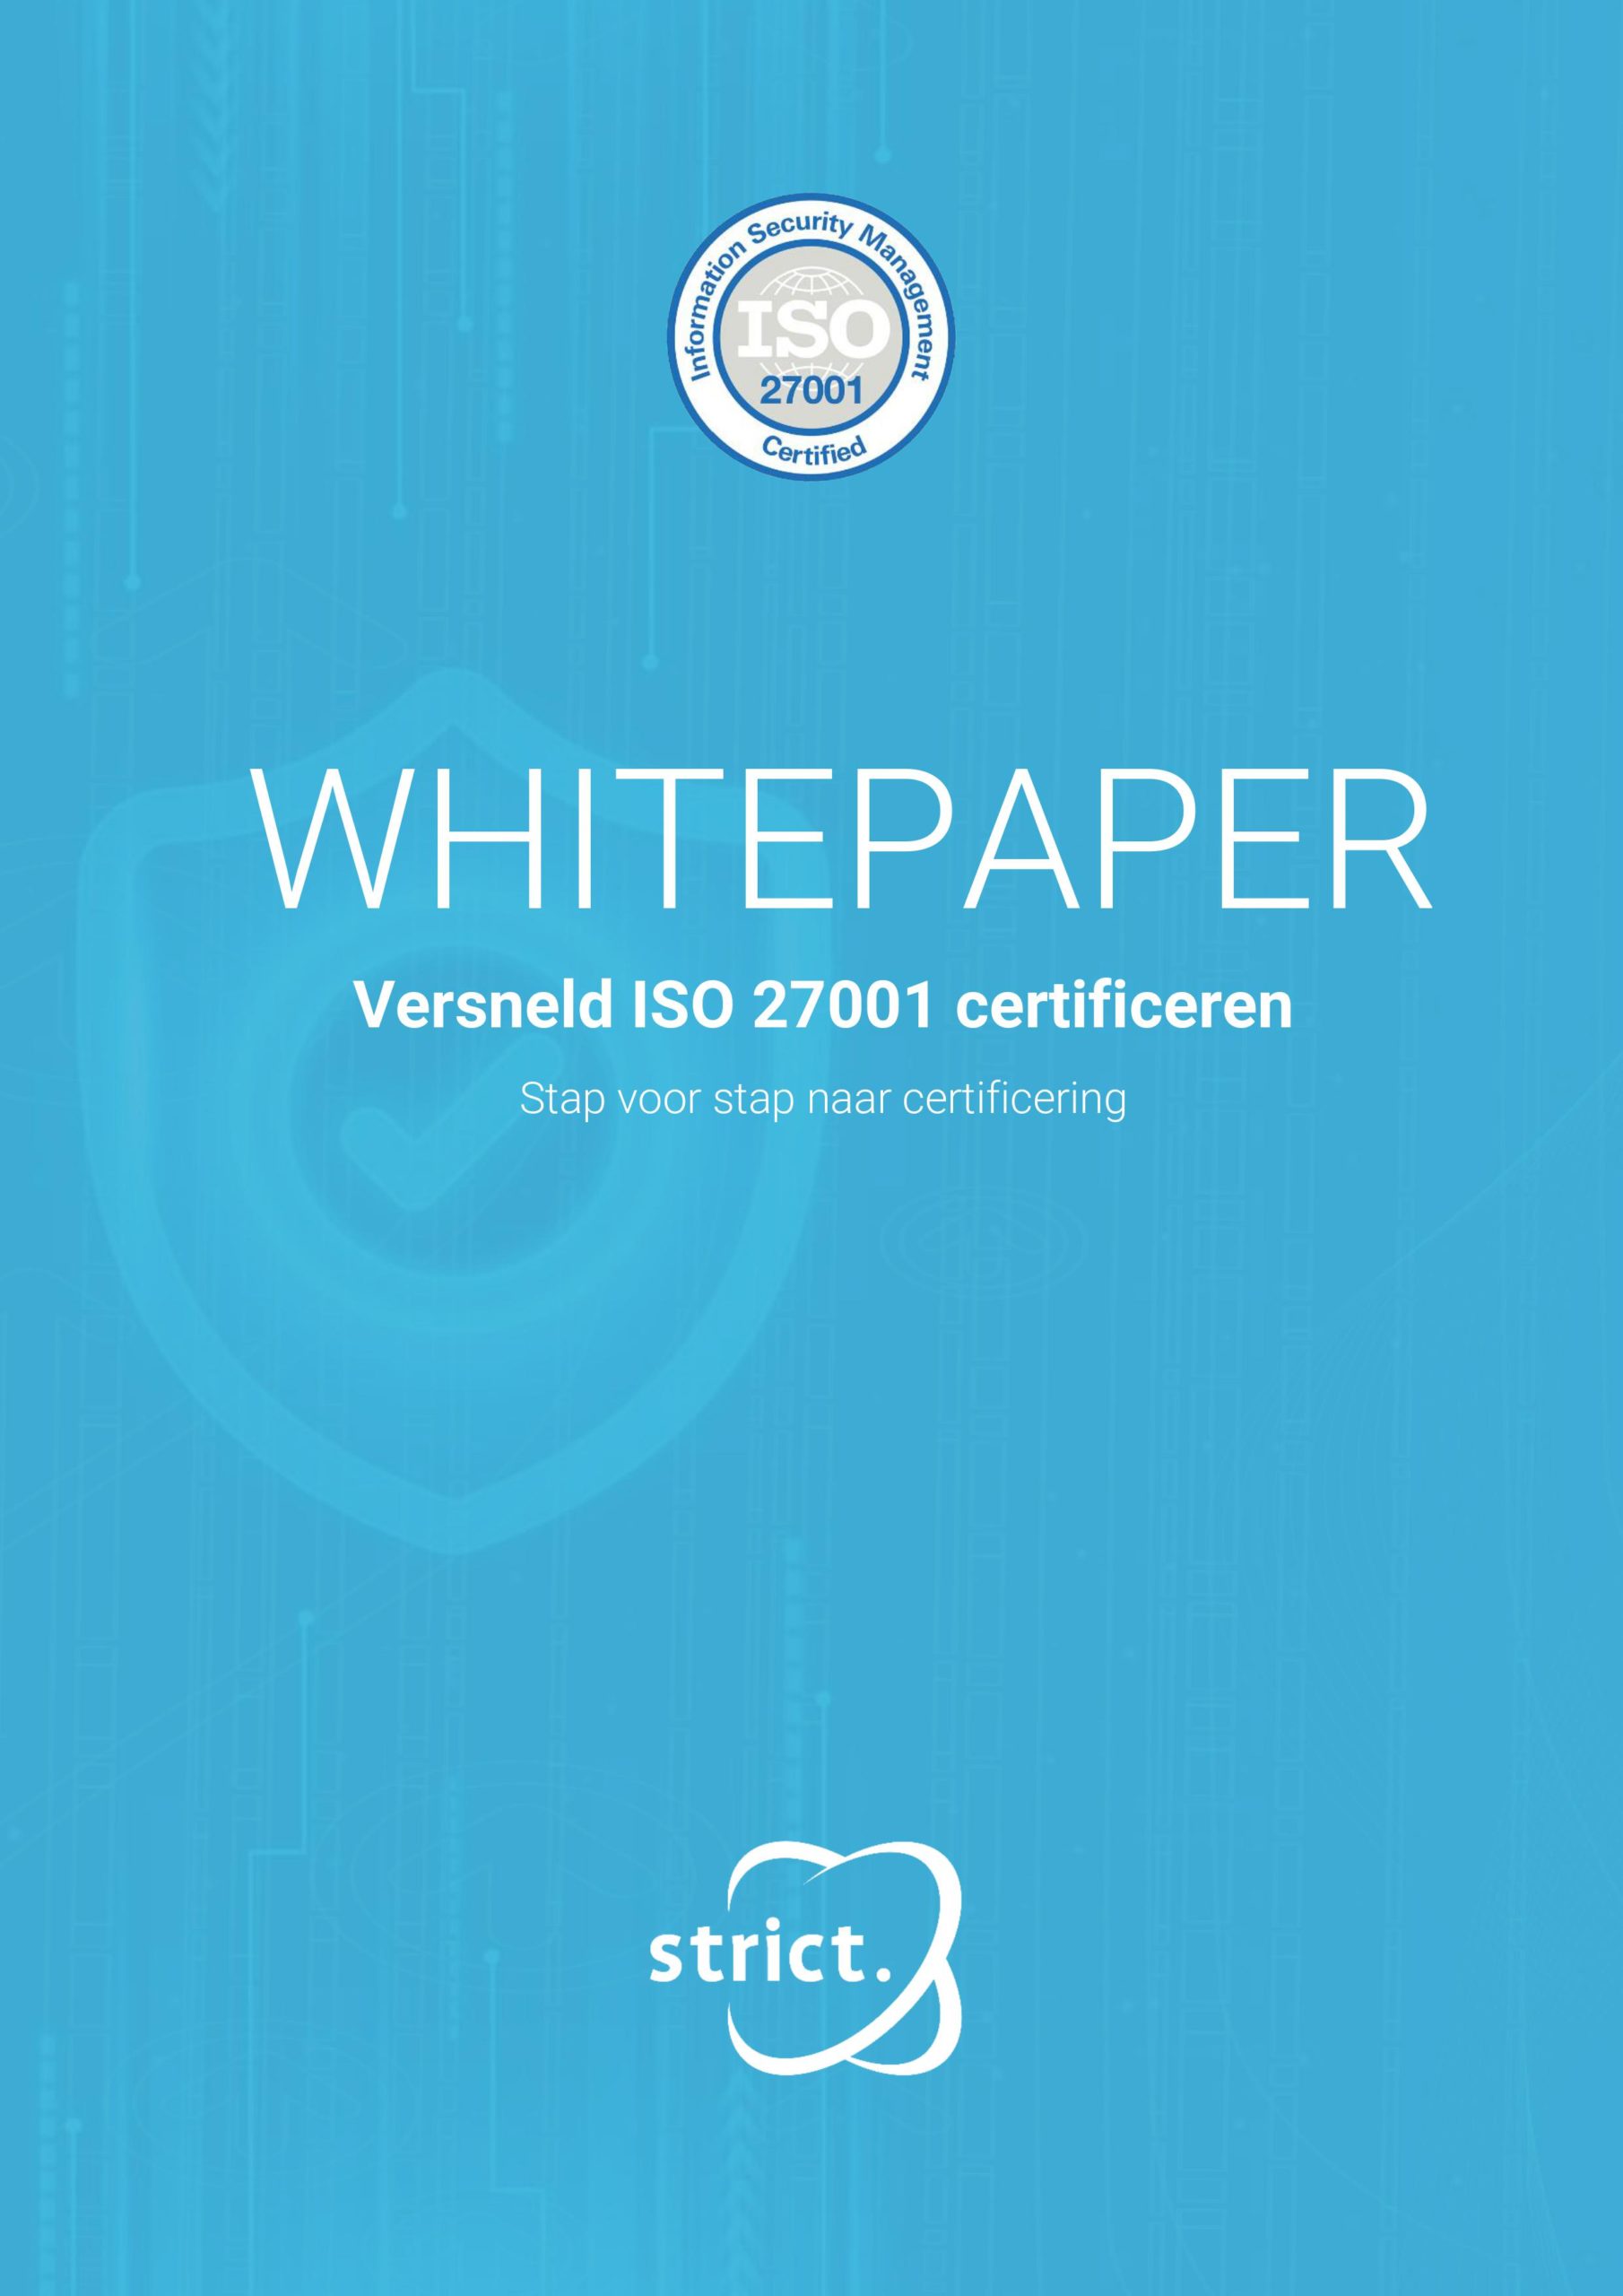 Whitepaper-Versneld-ISO-27001-certificeren-scaled